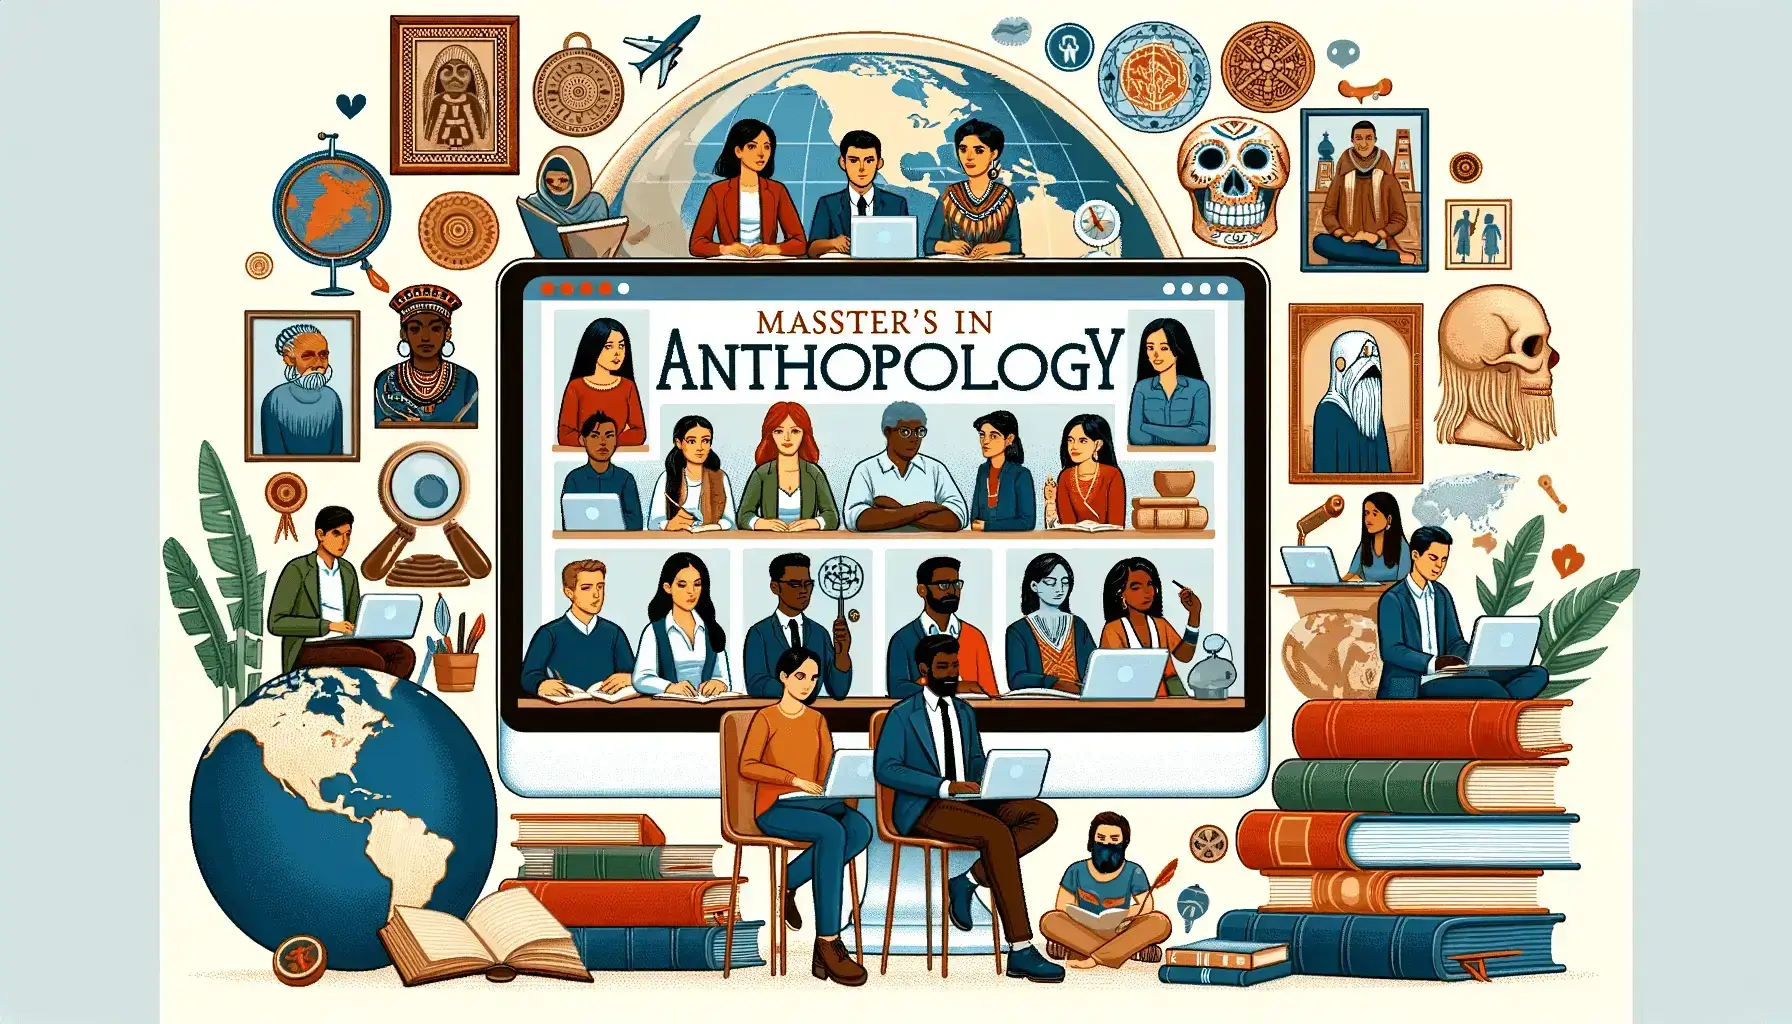 Master's in Anthropology online programs